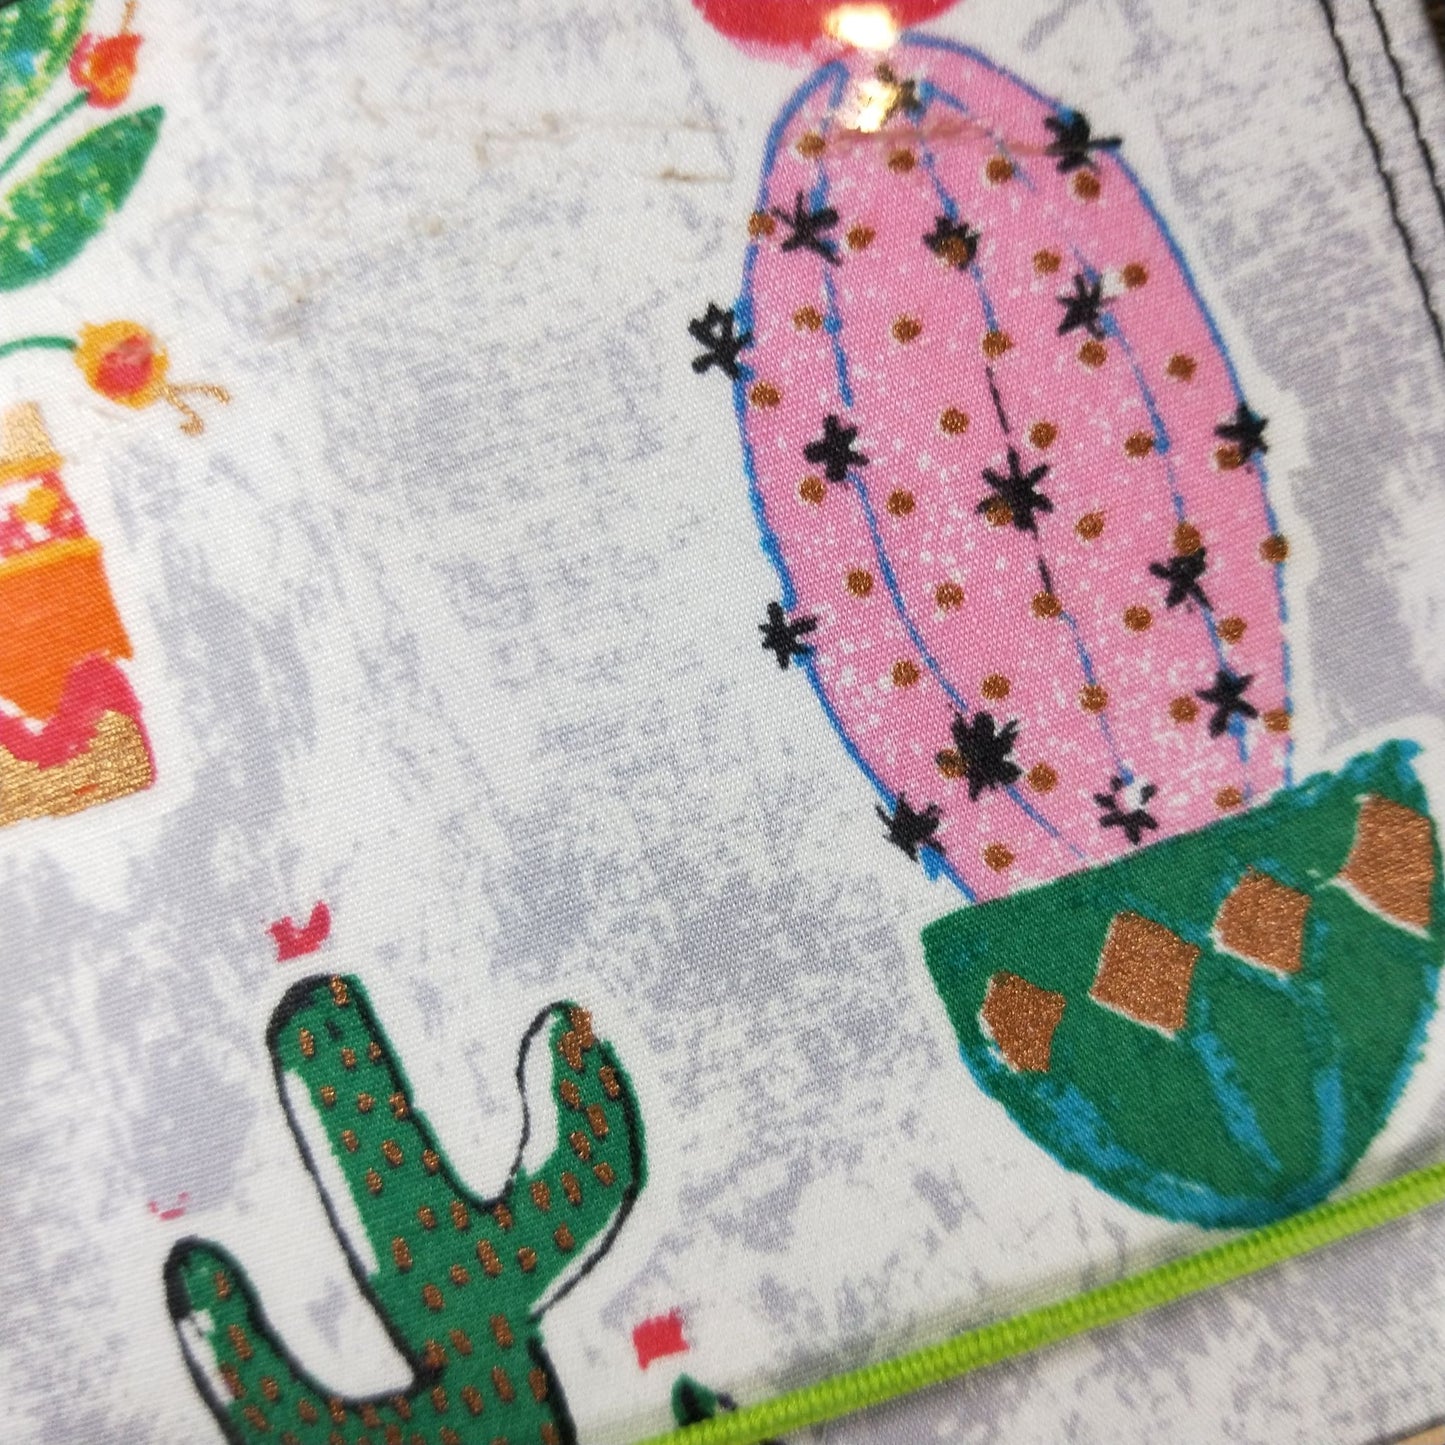 Wilddori Traveler's Notebook Cover Pink Cactus